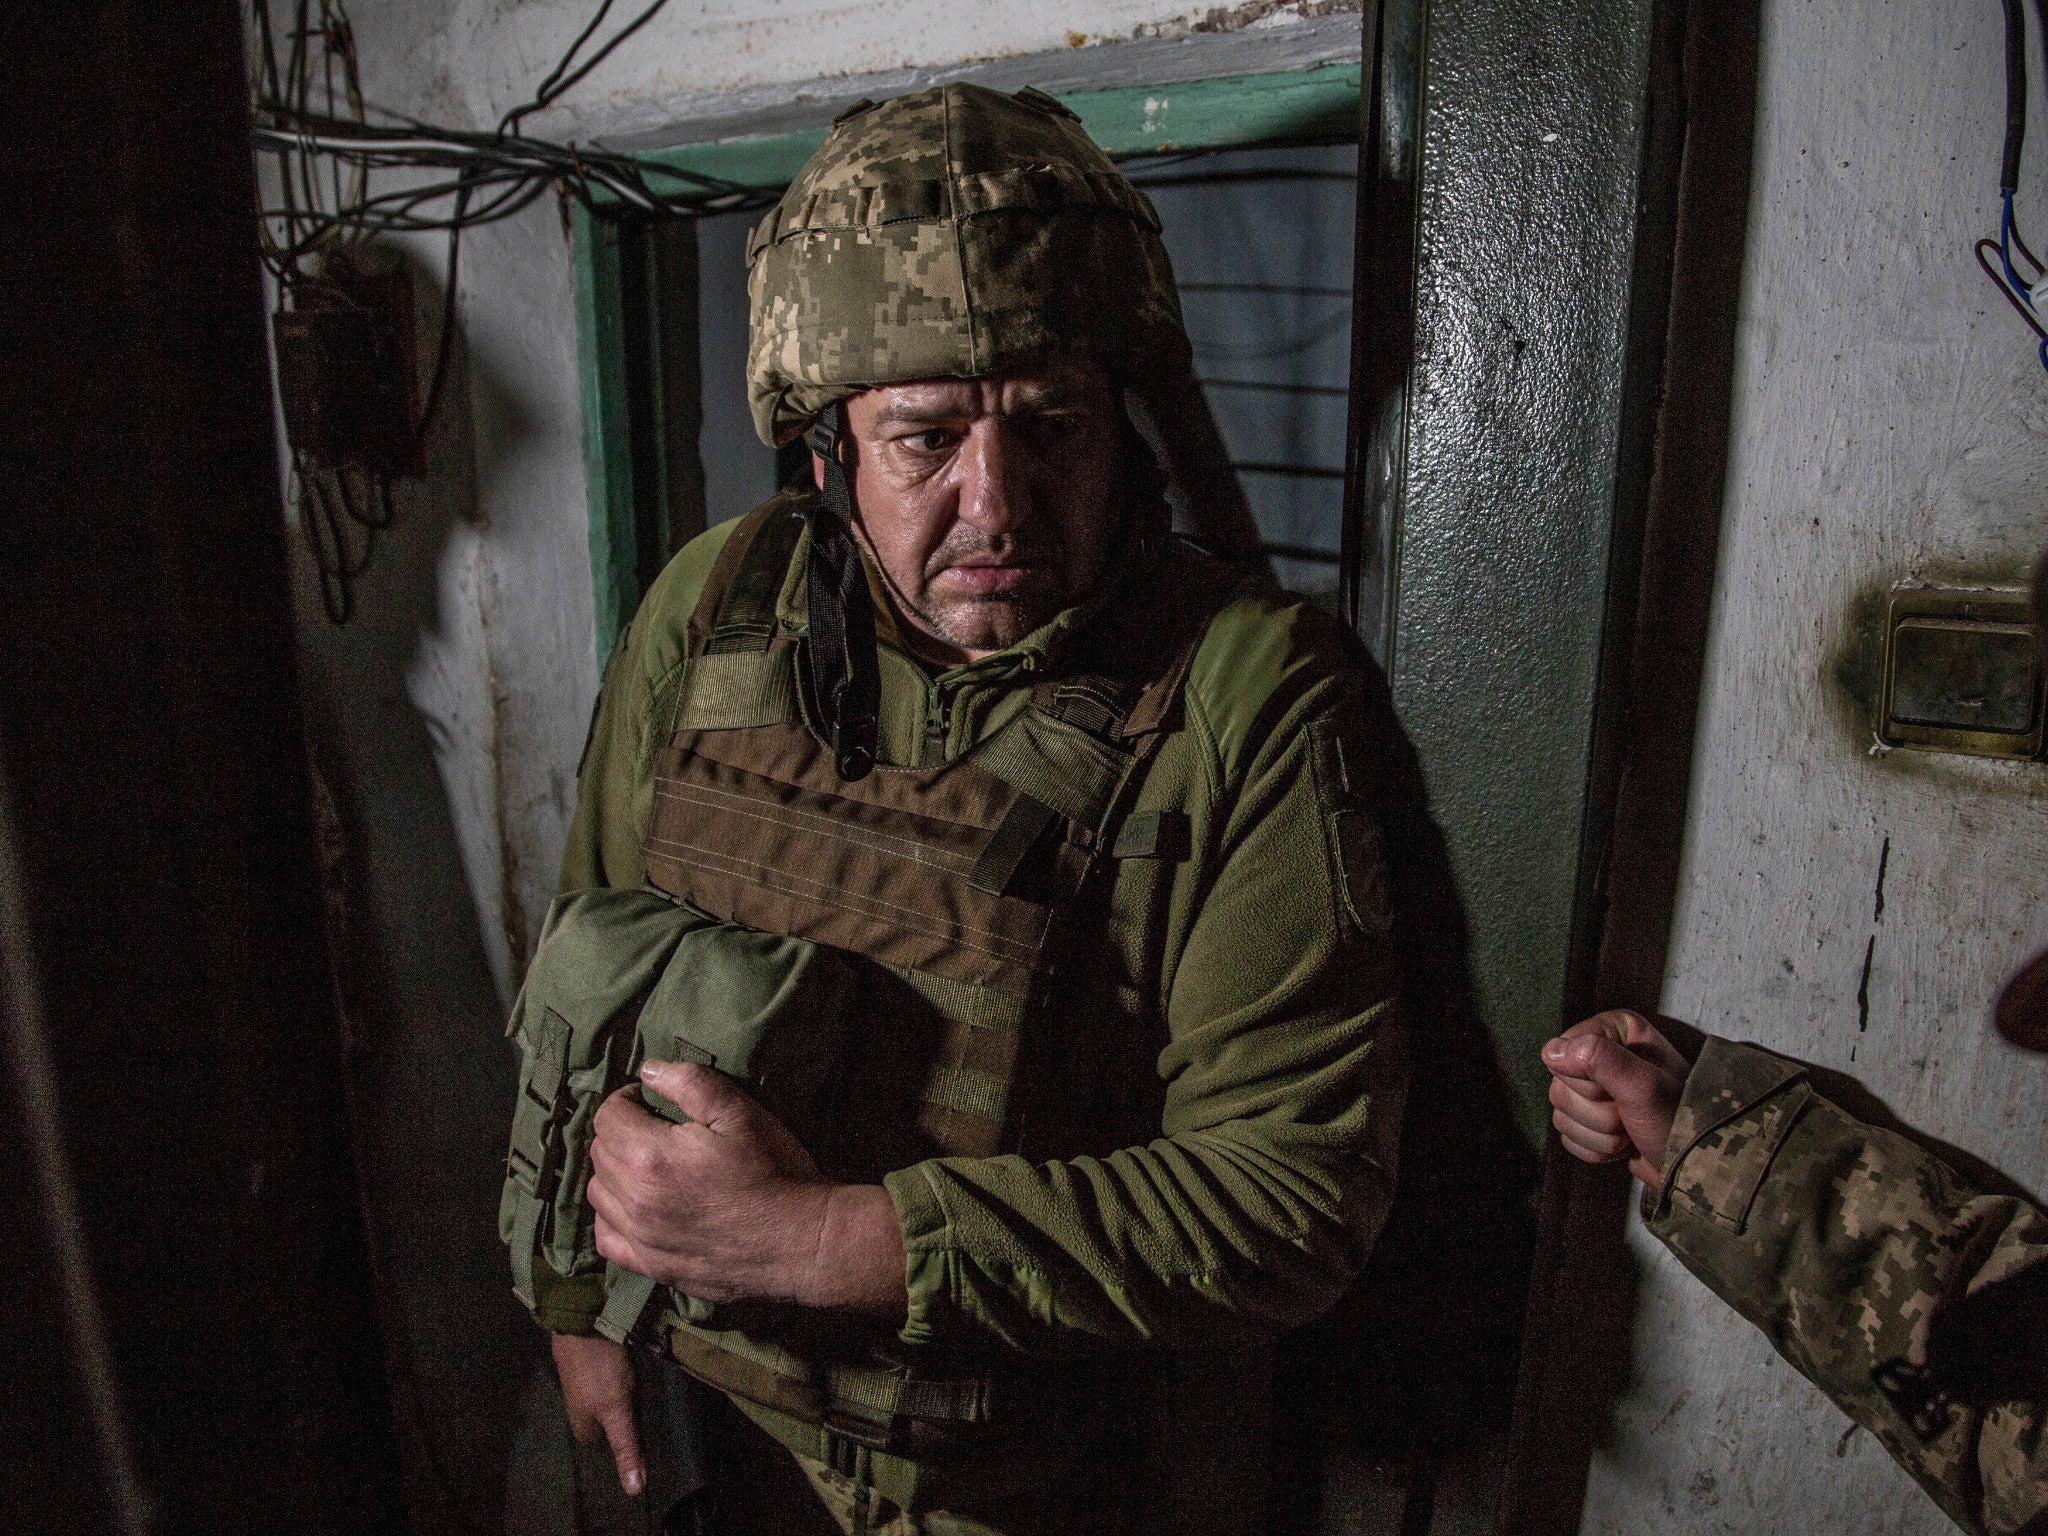 Ukrainian soldiers hide in a shelter during shelling in the village of Novoluhanske